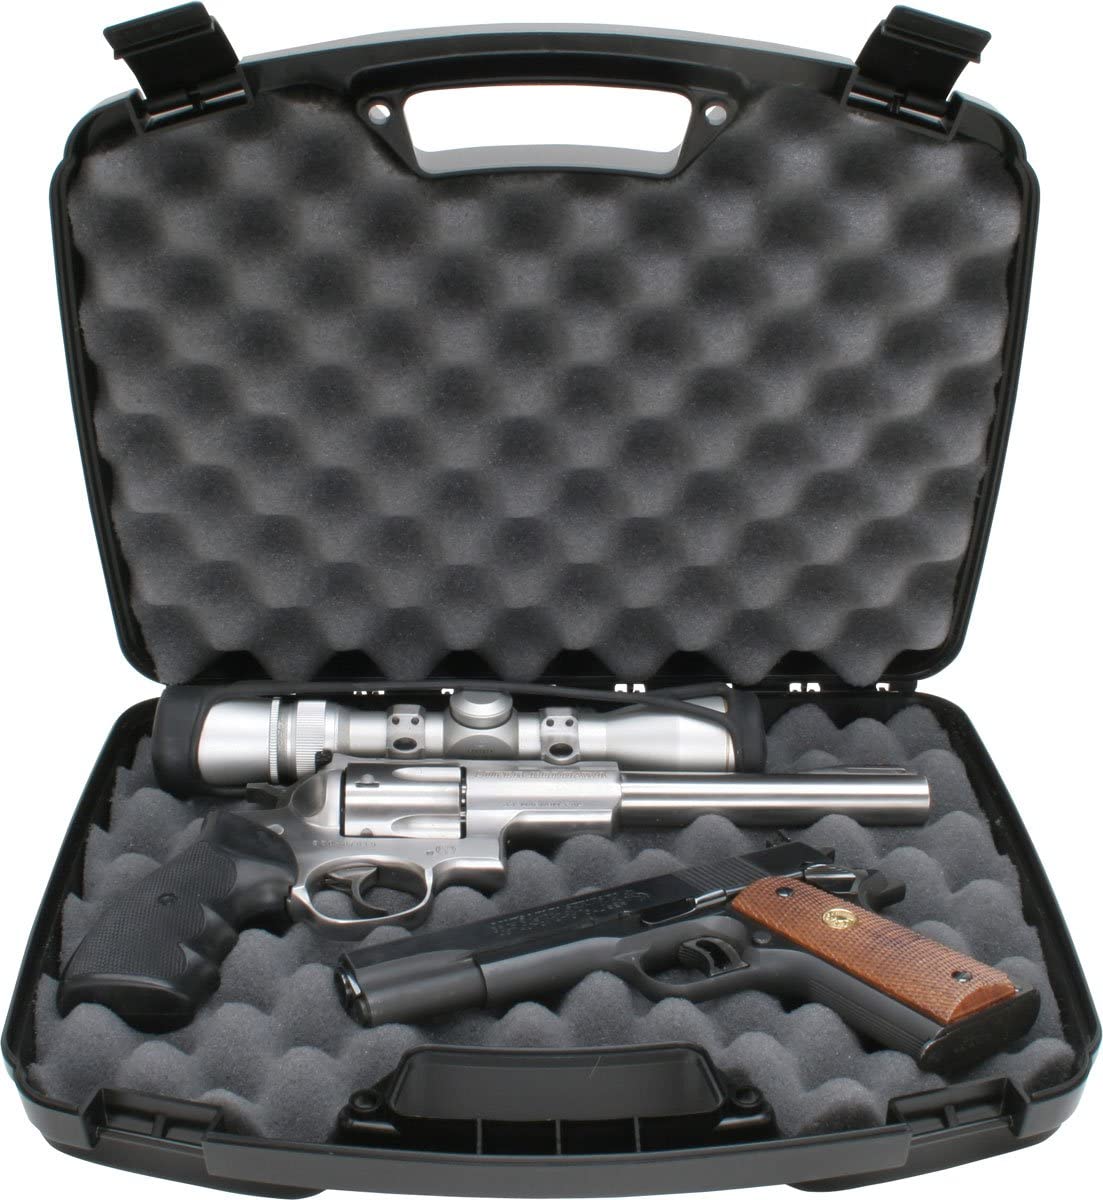 MTM 2 Pistol Handgun Case Up to 8.5-Inch Revolver Barrel